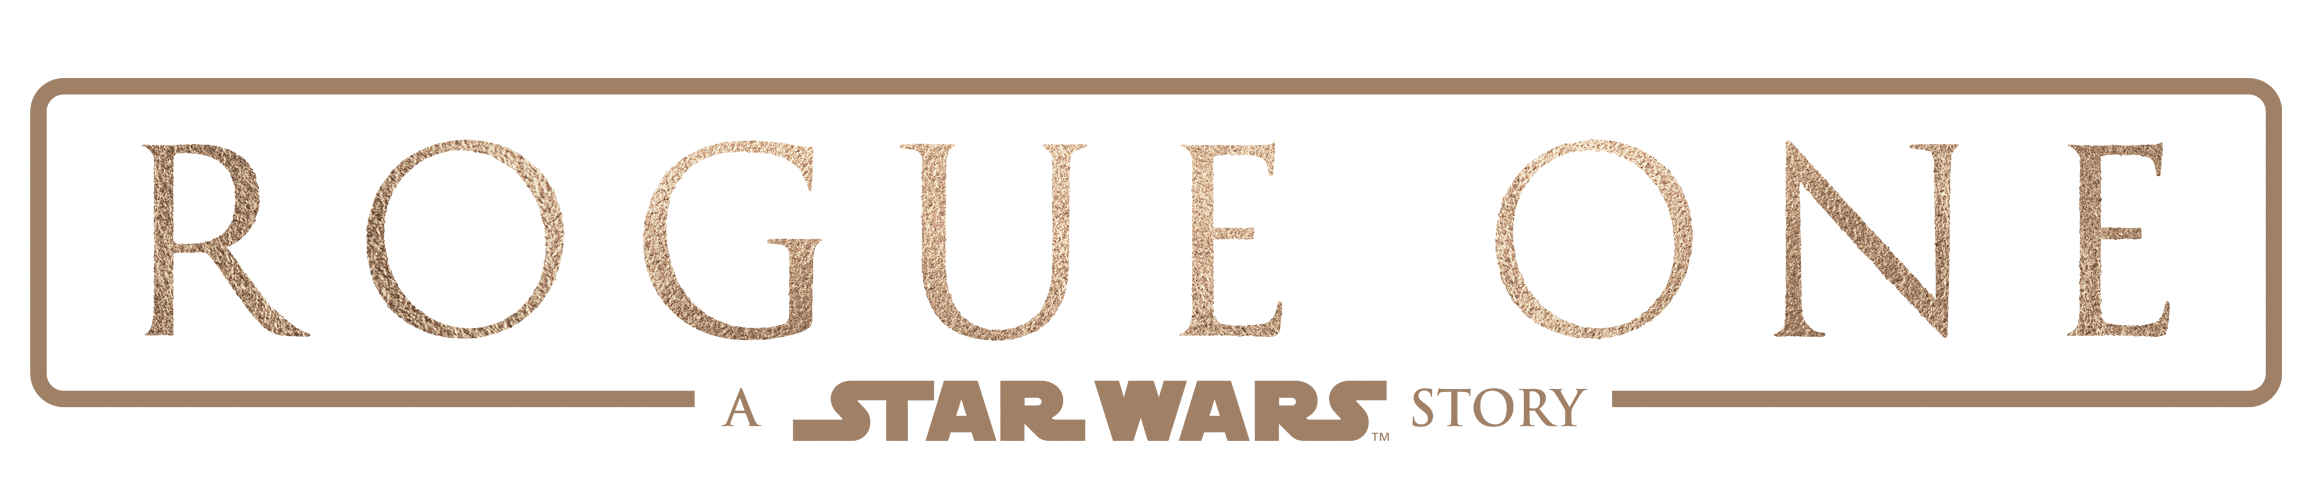 logo star wars rogue one